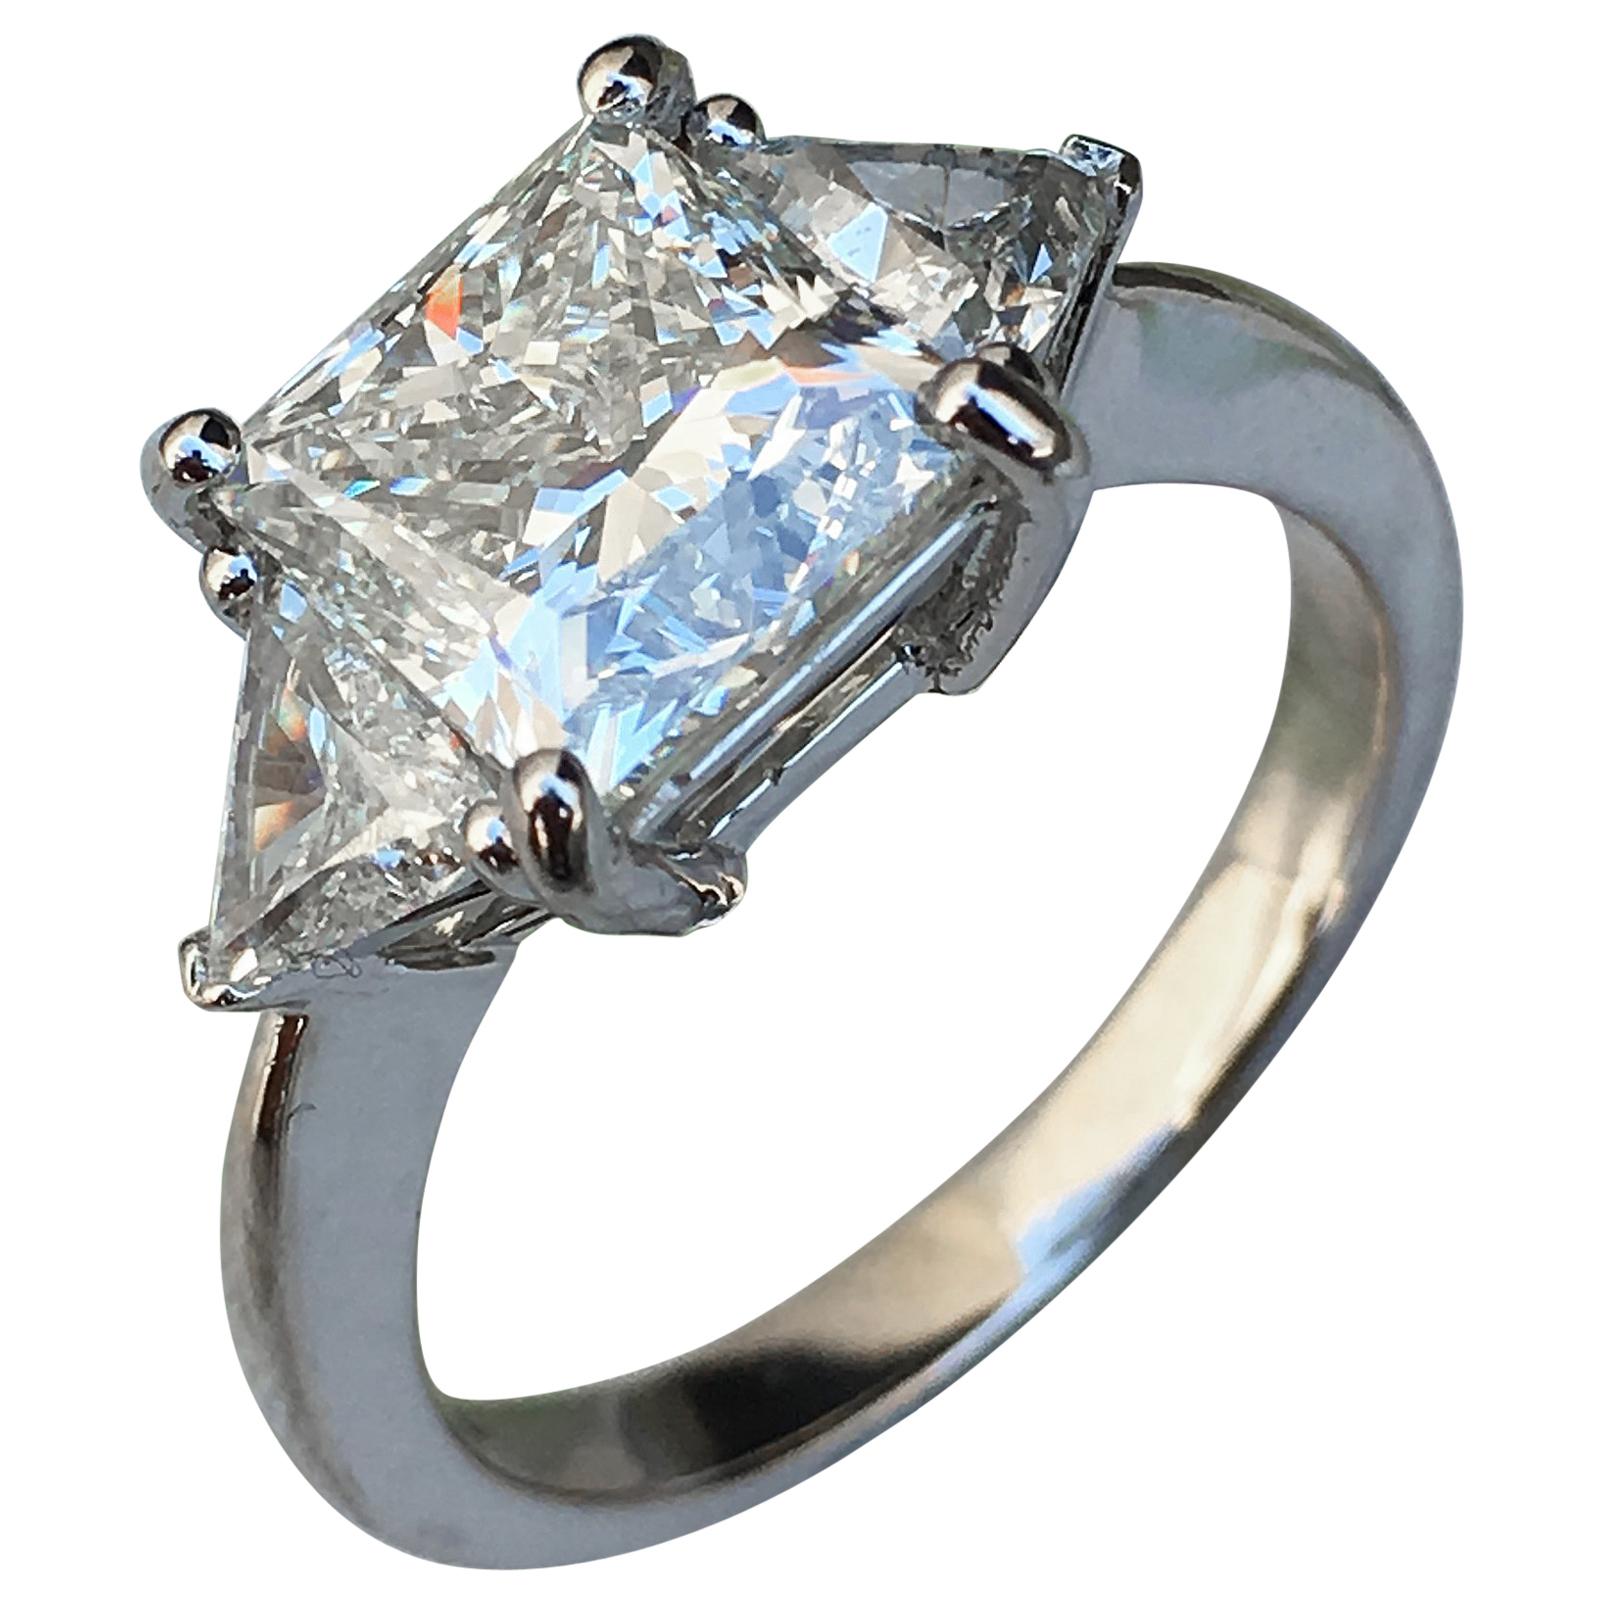 4.6 Carat TW Princess Cut Diamond Engagement Ring Set in Platinum with Trillions For Sale